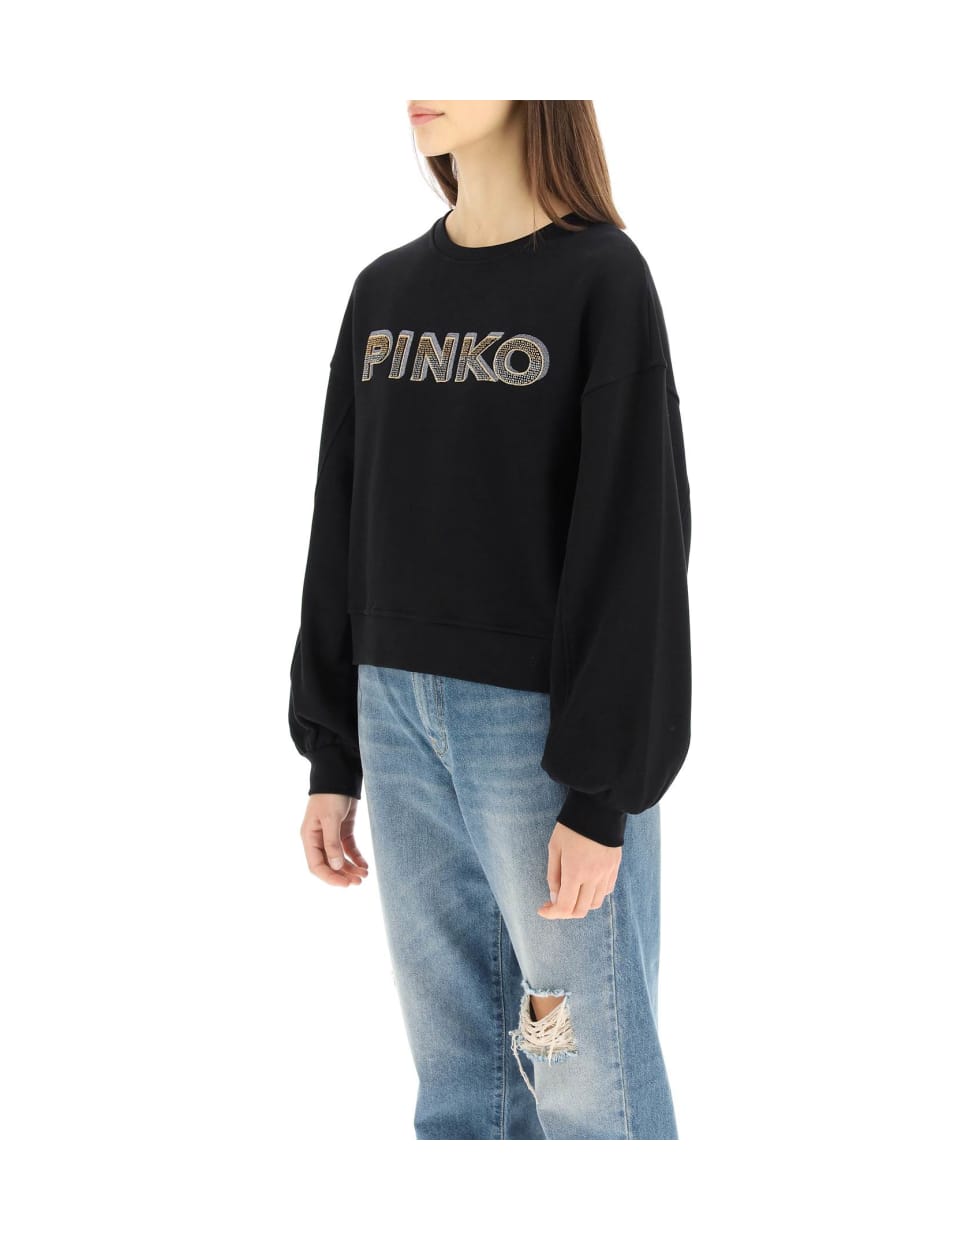 Pinko Sweatshirt With Jewel Logo - NERO LIMOUSINE (Black)